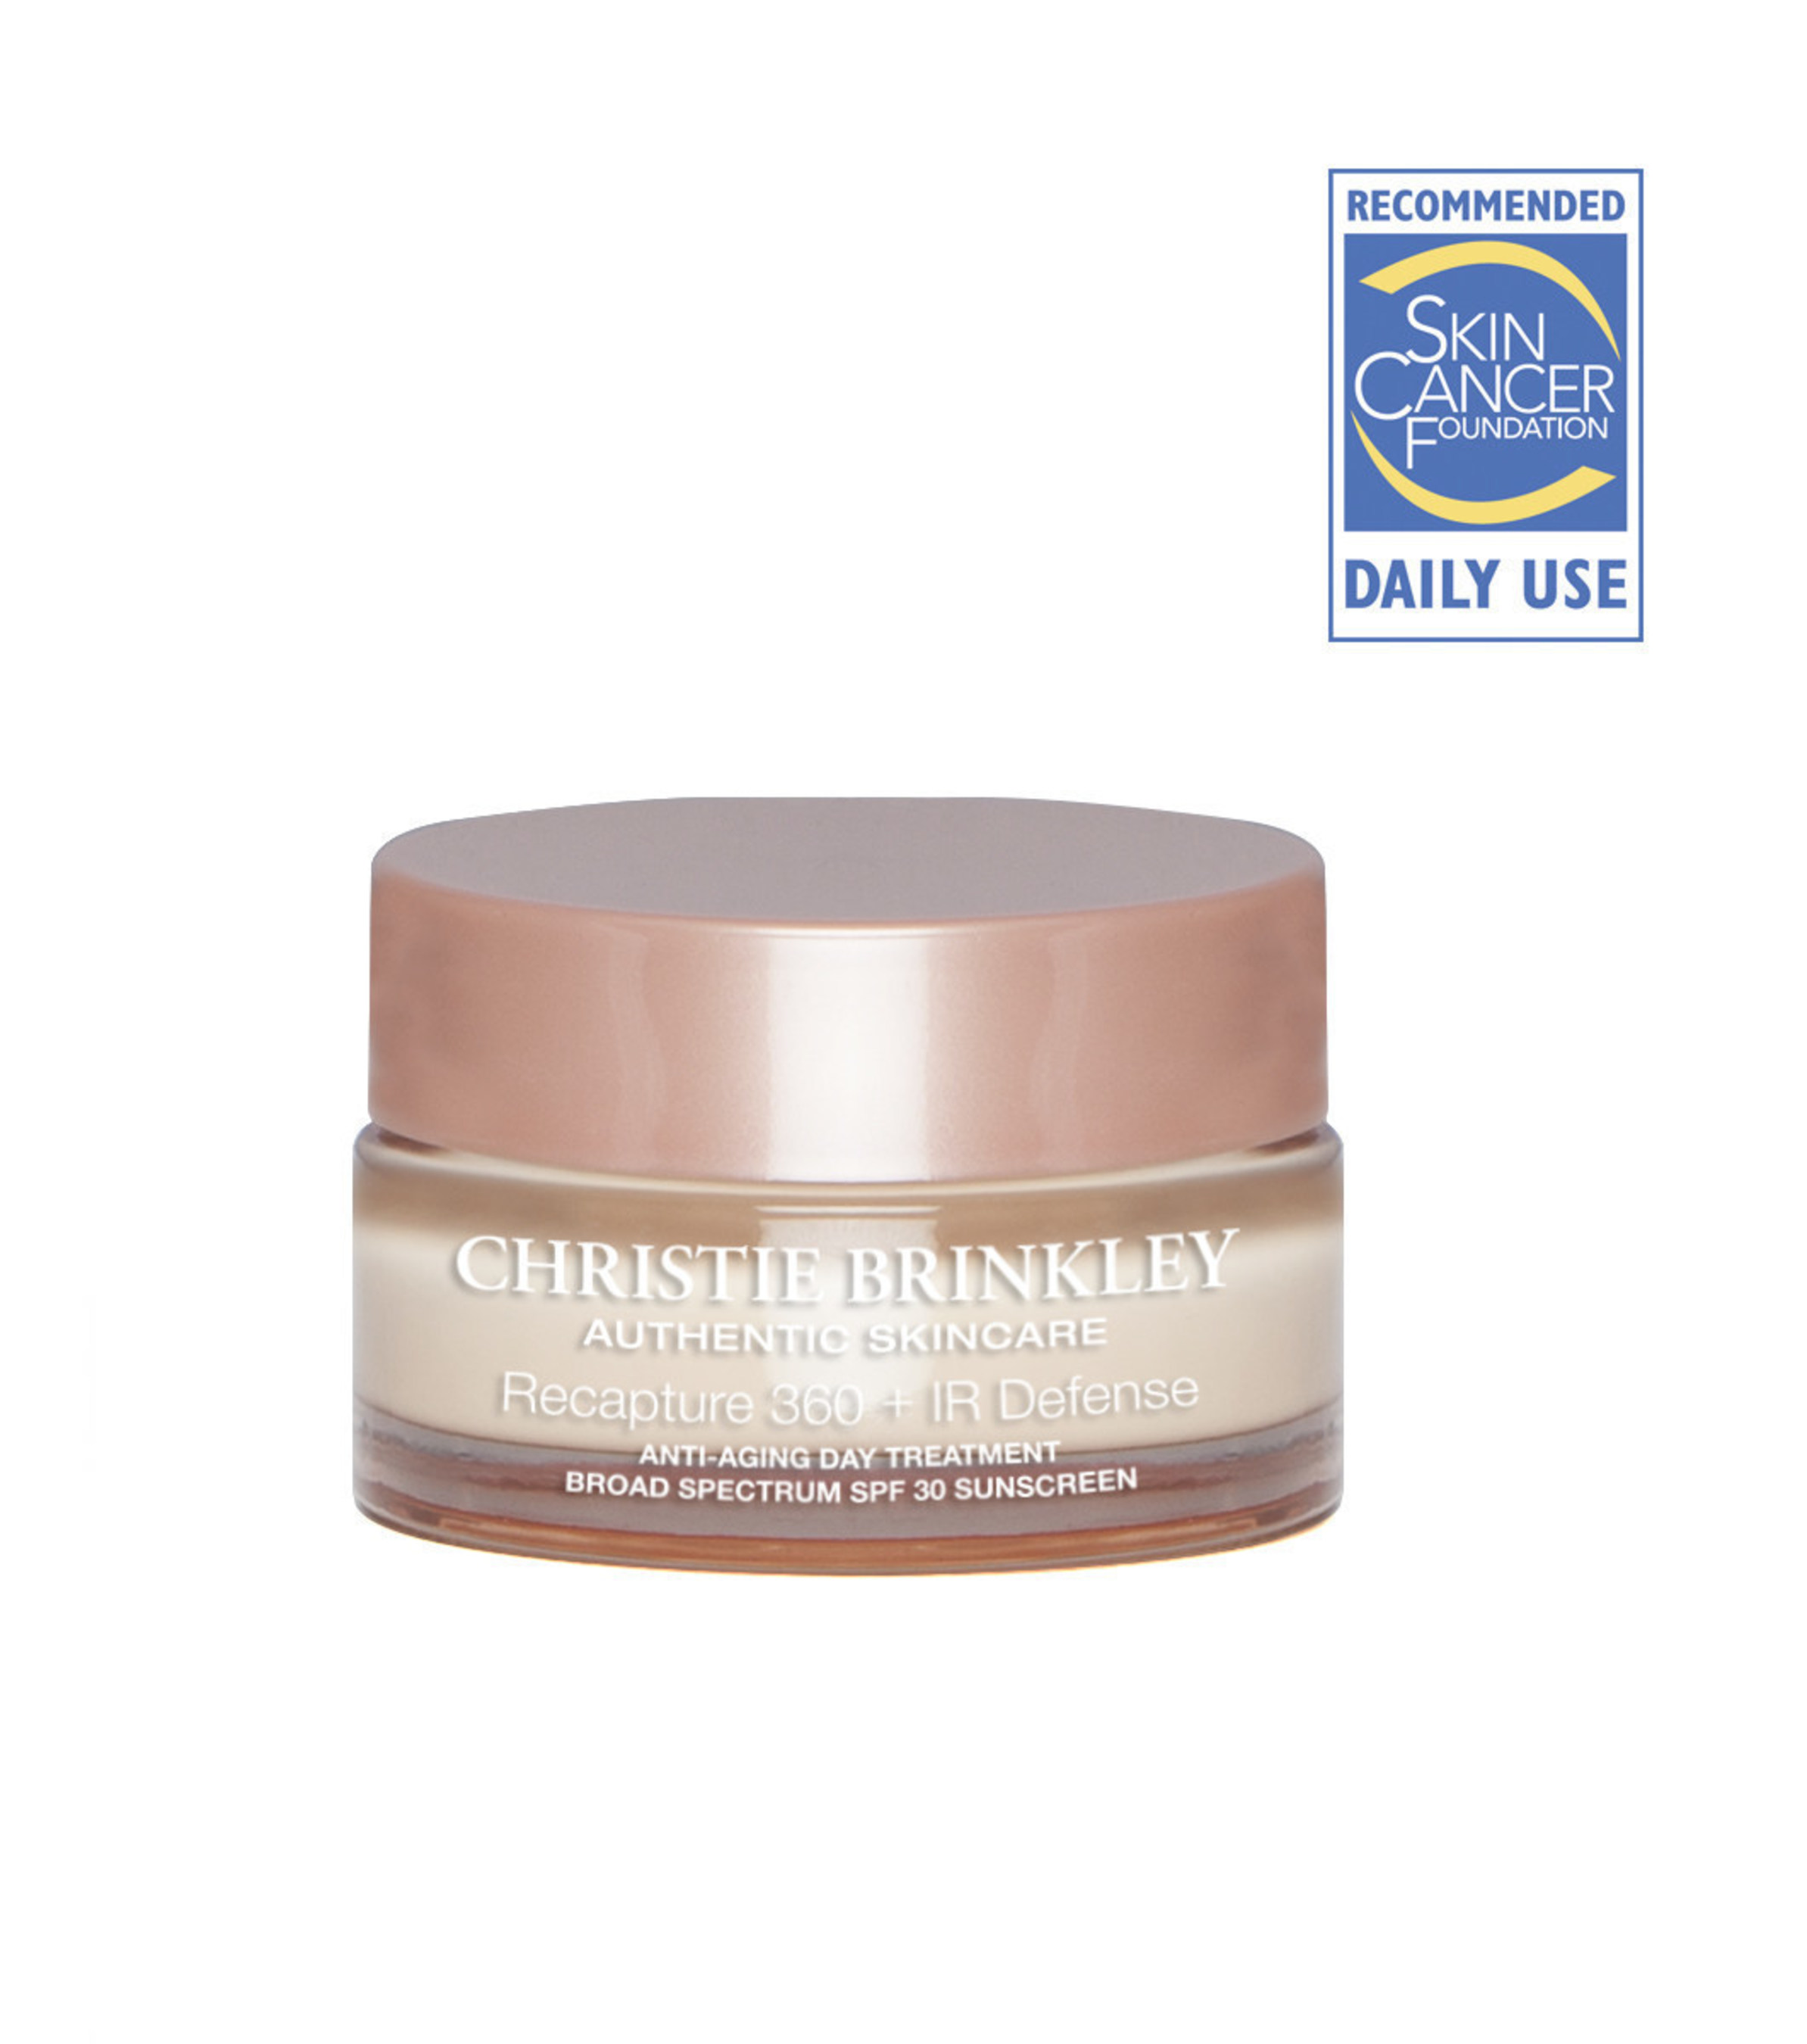 Christie Brinkley Authentic Skincare 360 + IR Defense Anti-Aging Day Cream